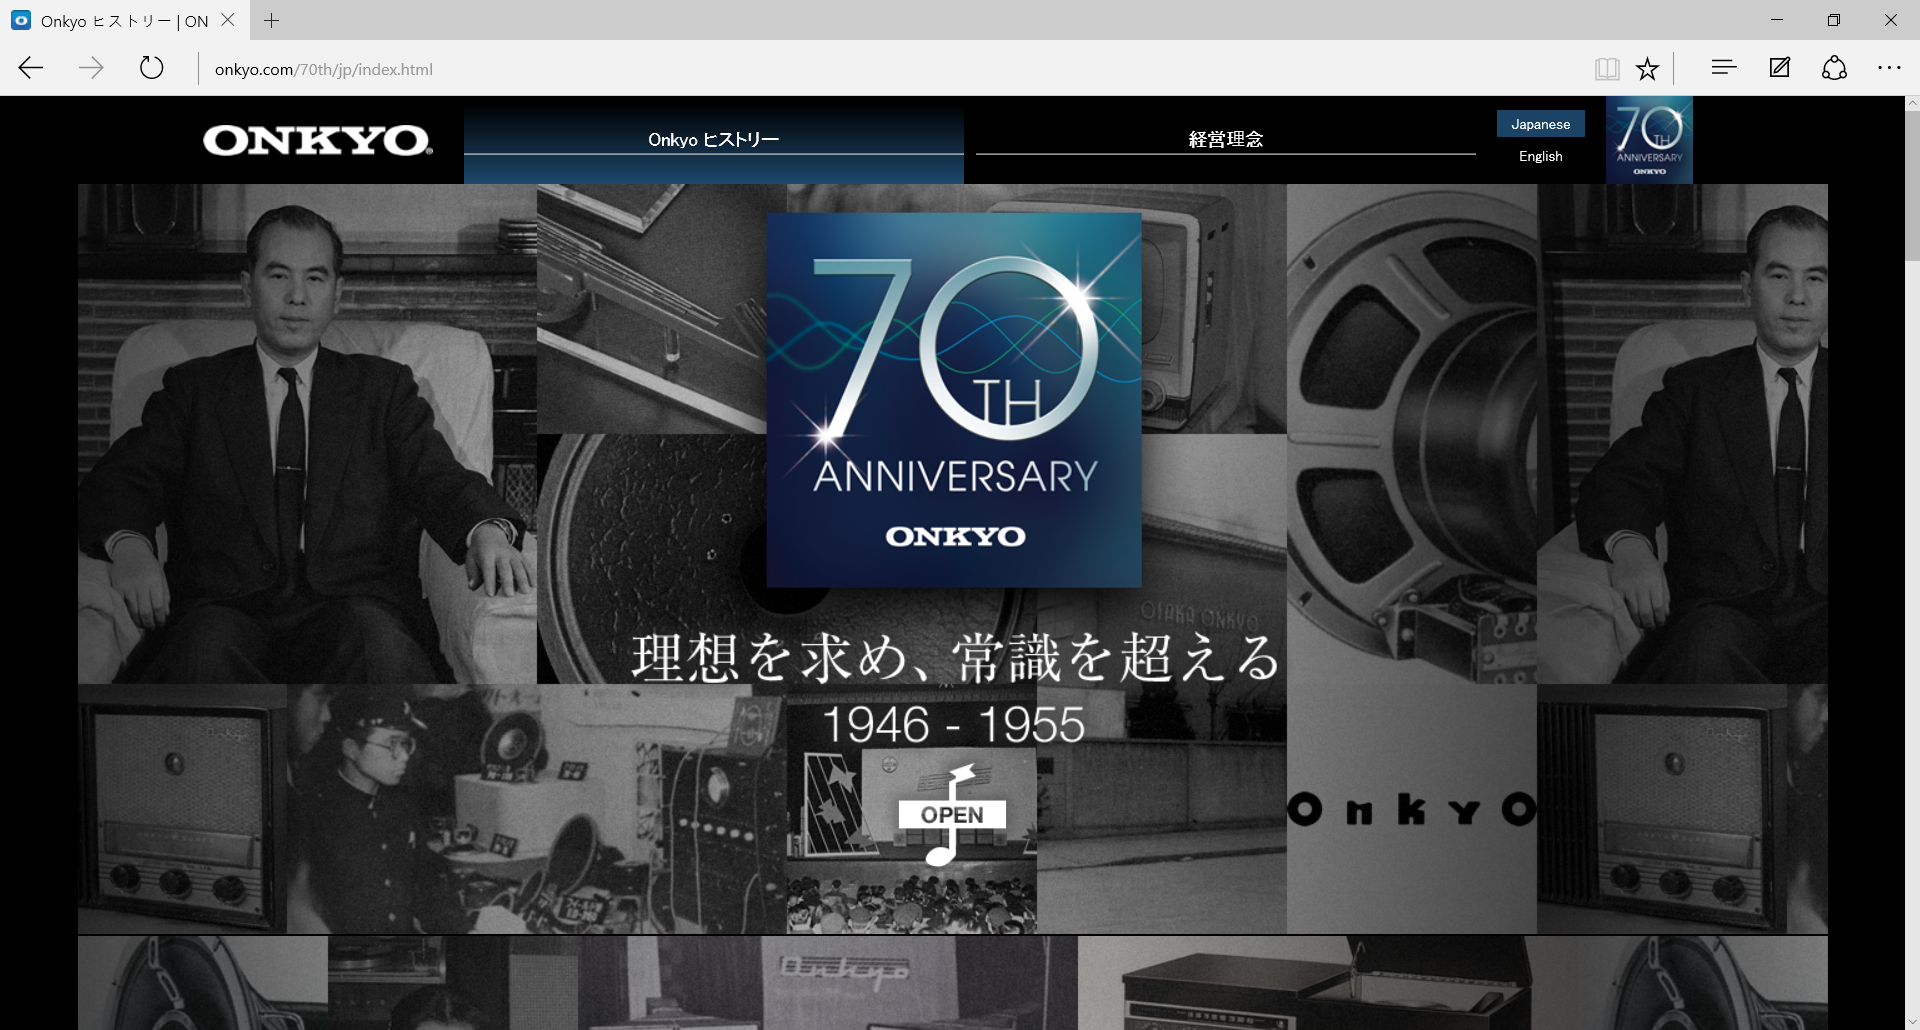  Onkyo 踏入第 70 周年　專屬網站登場